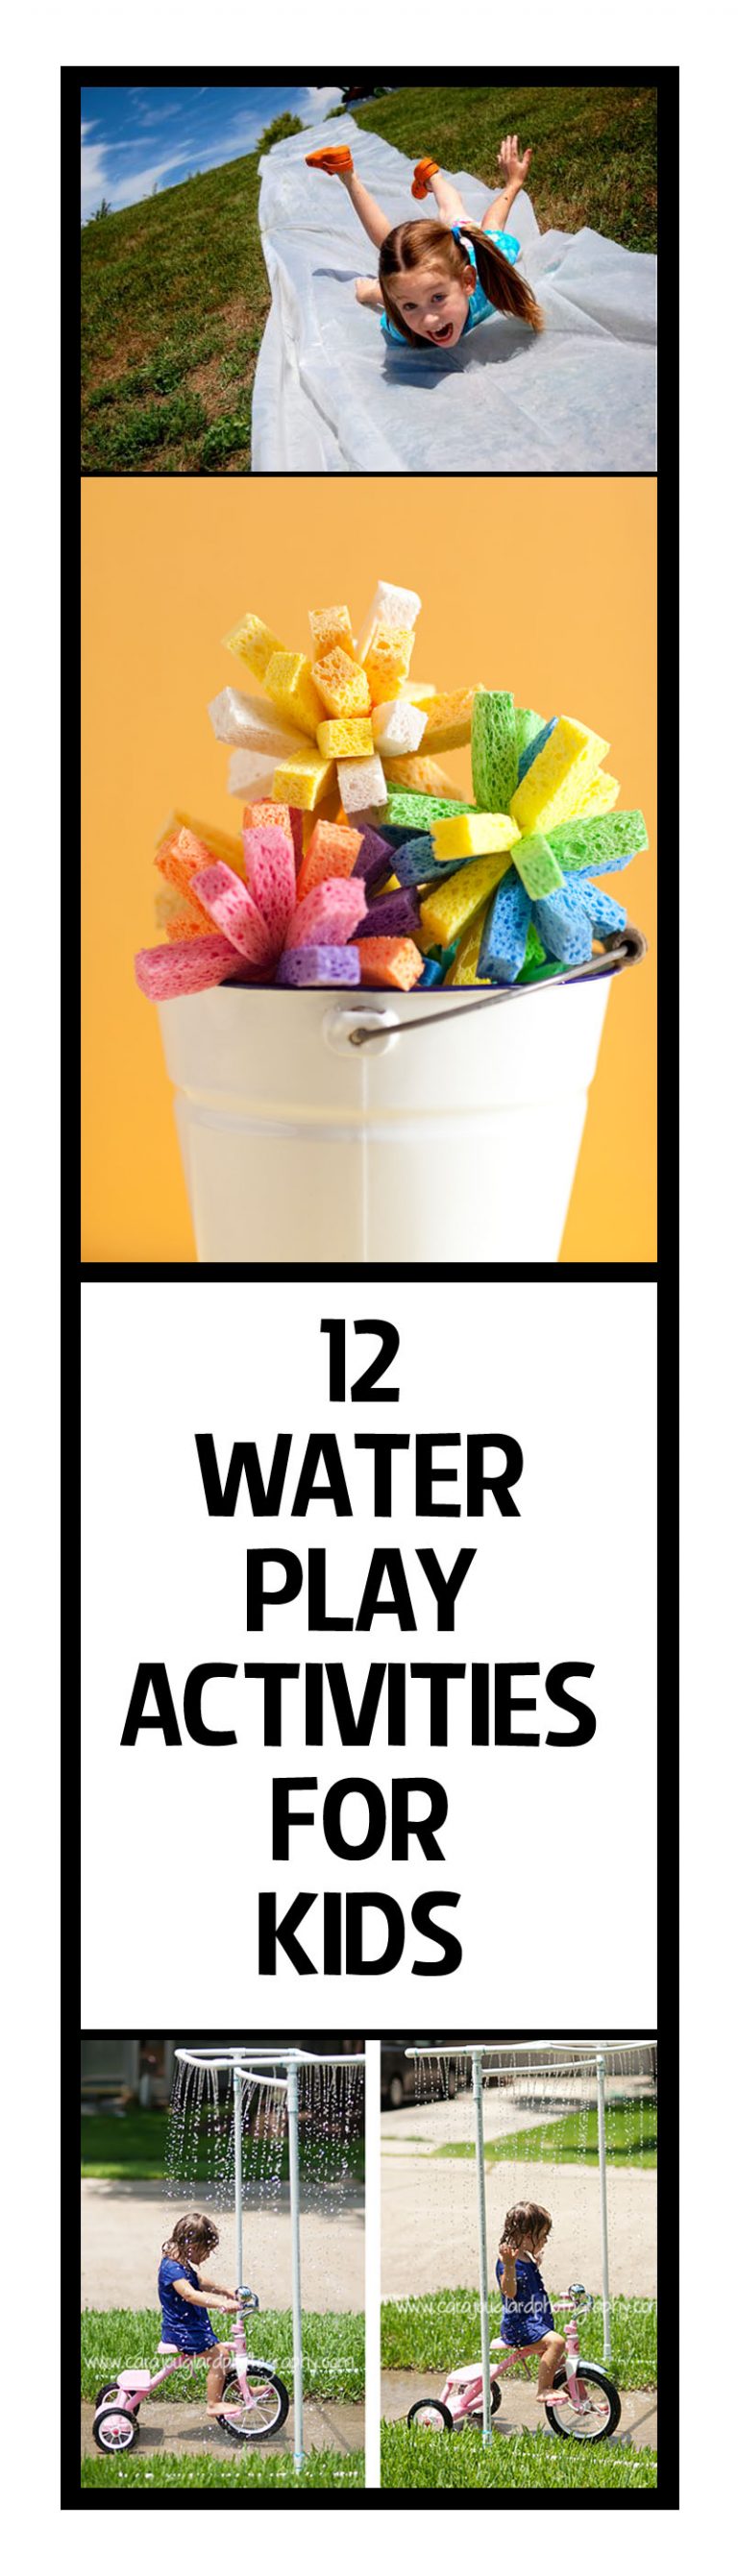 12 Water Play Activities for Kids